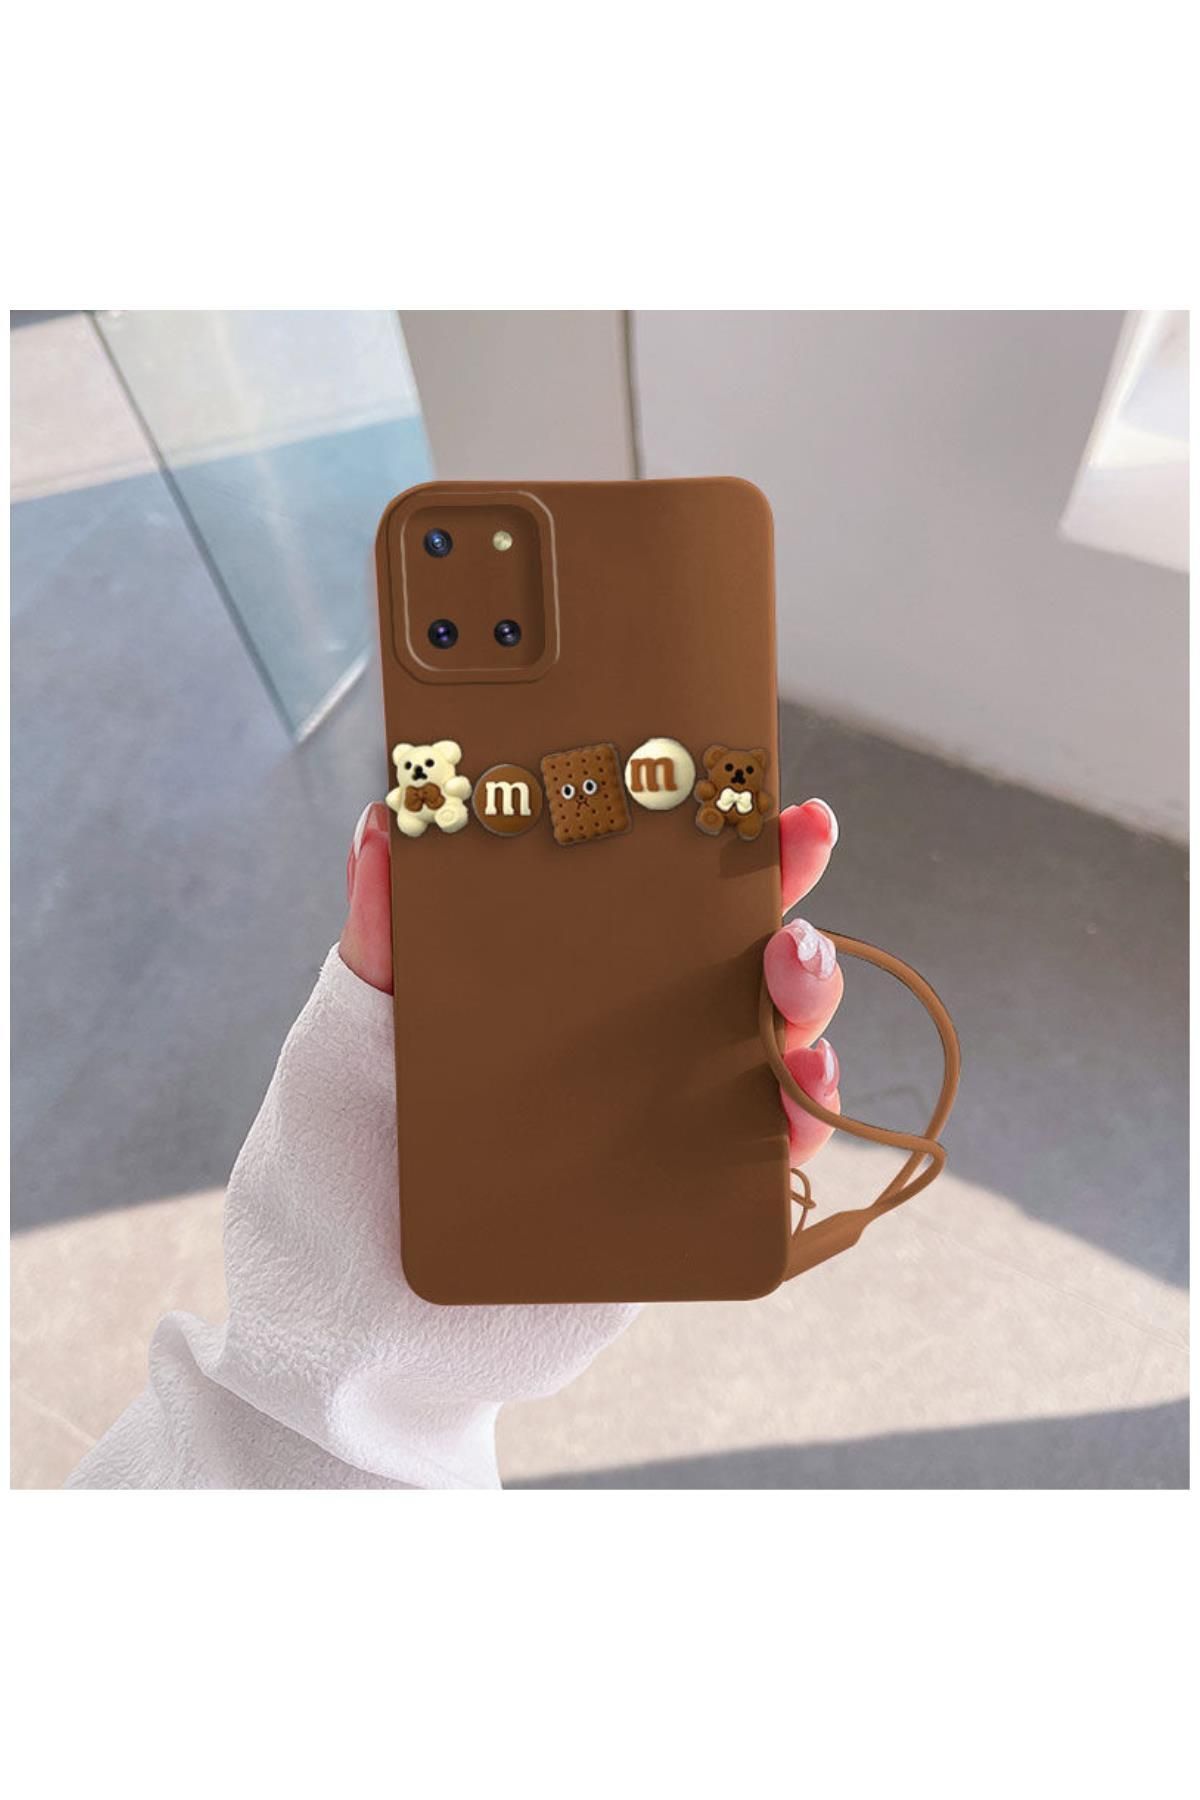 Zebana Samsung Galaxy Note 10 Lite Uyumlu Kılıf Love Bear Silikon Kılıf Kahverengi